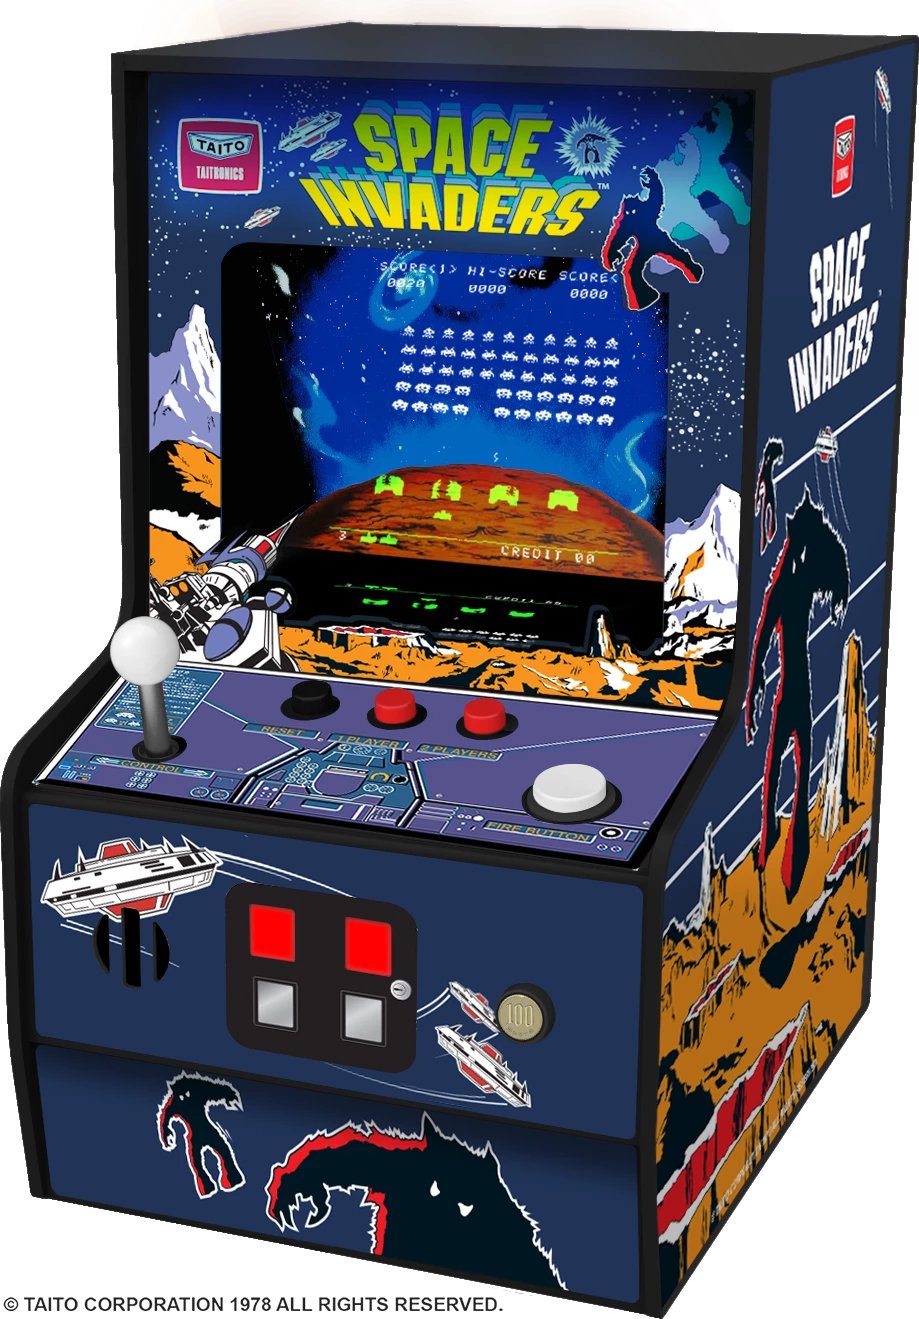 Paisje portative lojërash Space Invaders, My Arcade Micro Player, 6.75"